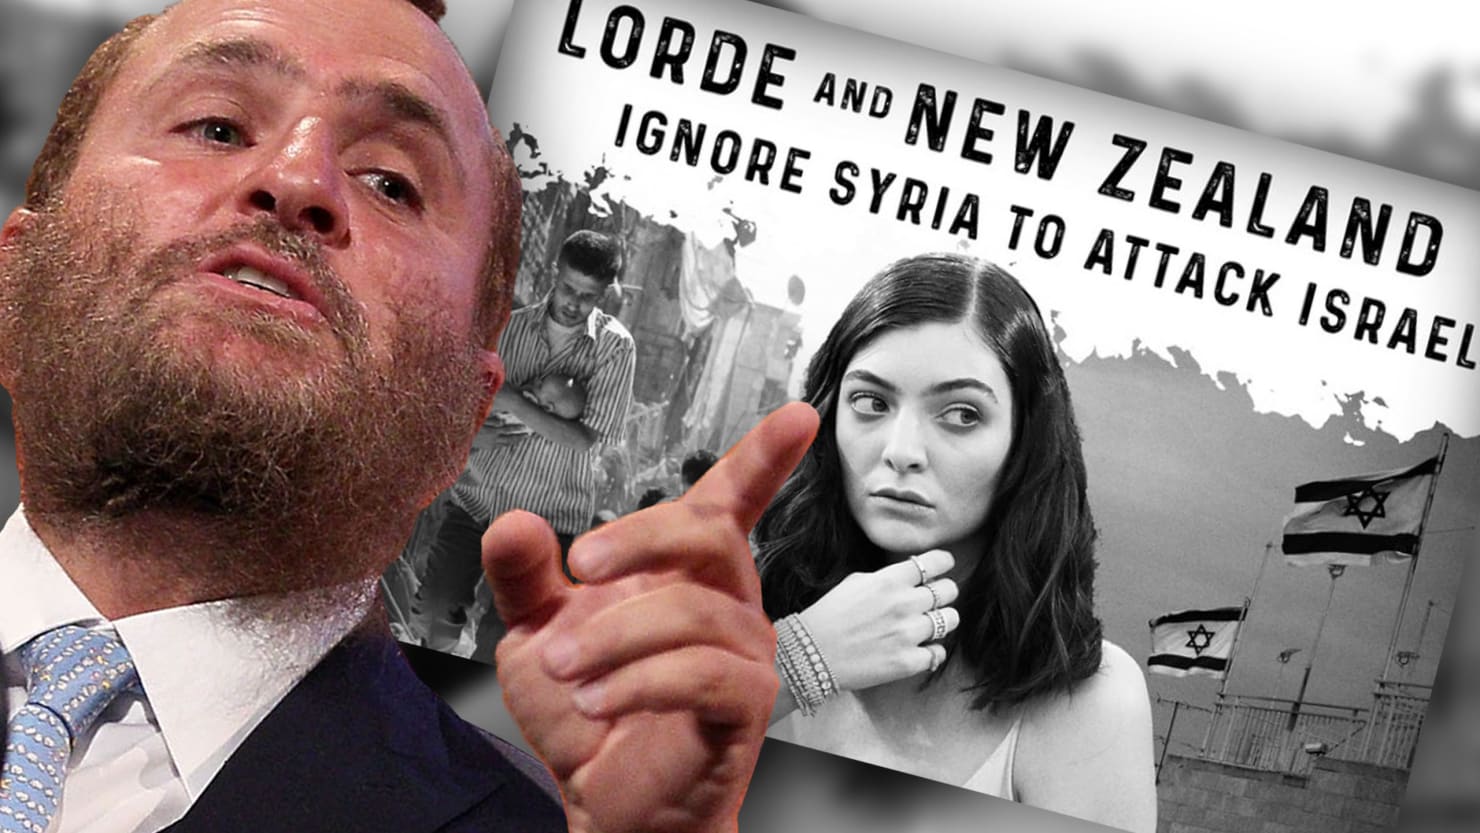 Lorde Sex Videos Full - The Trump-Loving, Porn-Hating Rabbi Attacking Lorde